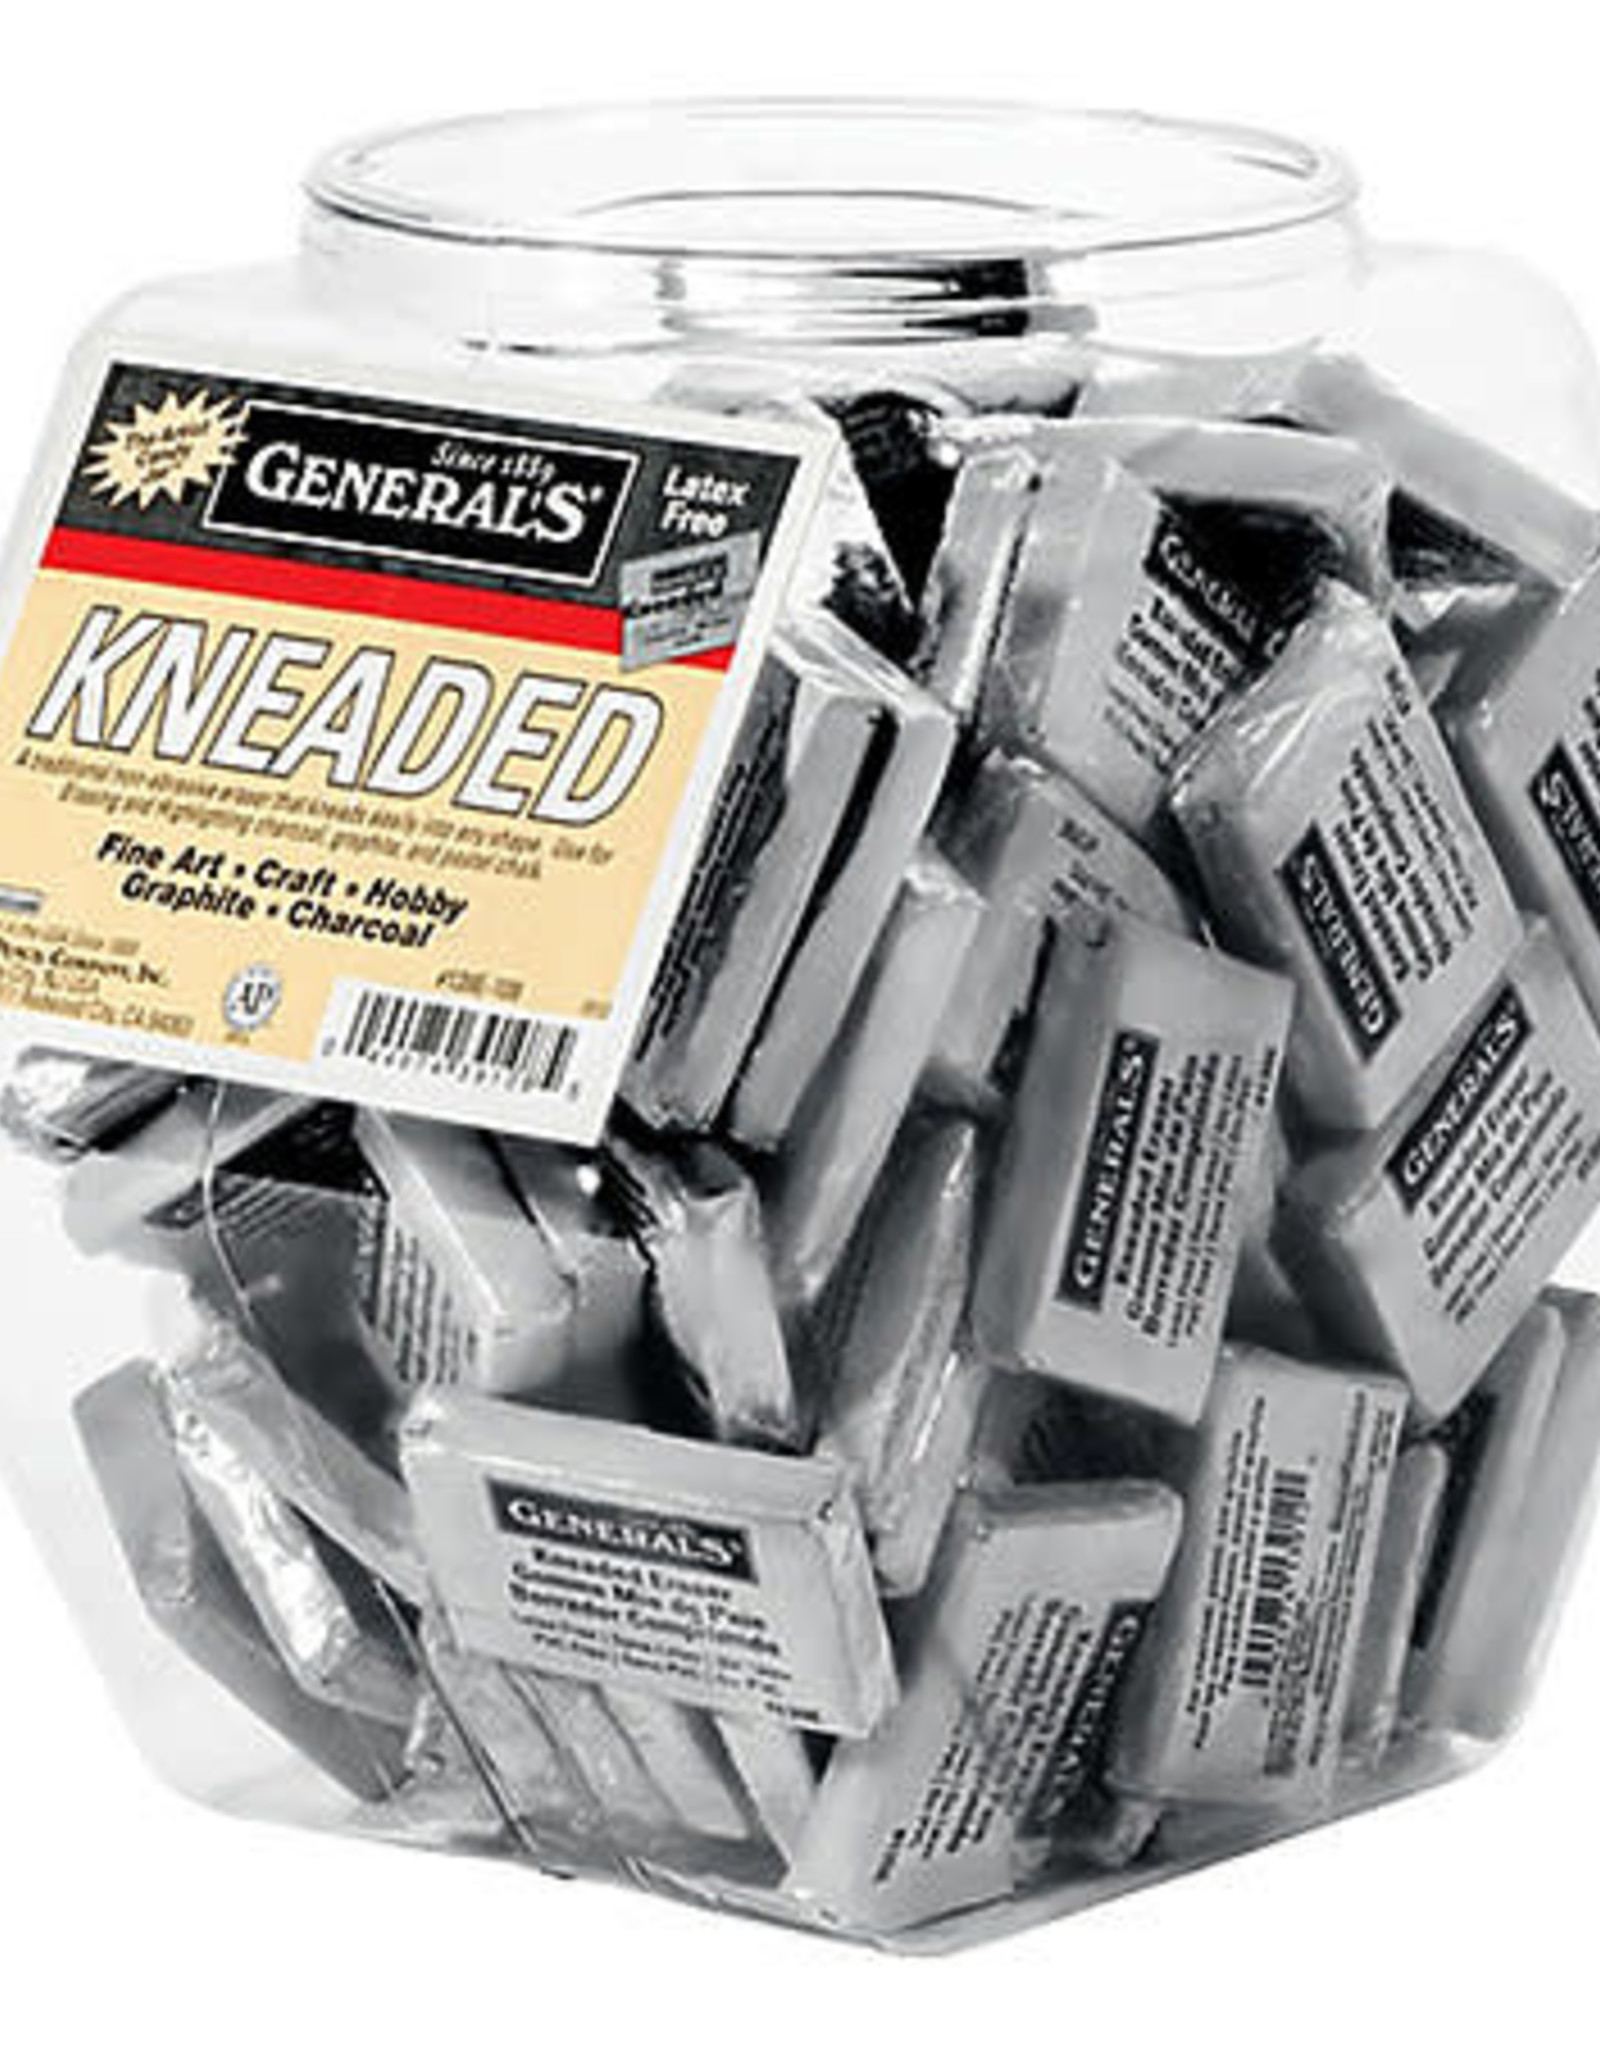 General Pencil General's Kneaded Eraser